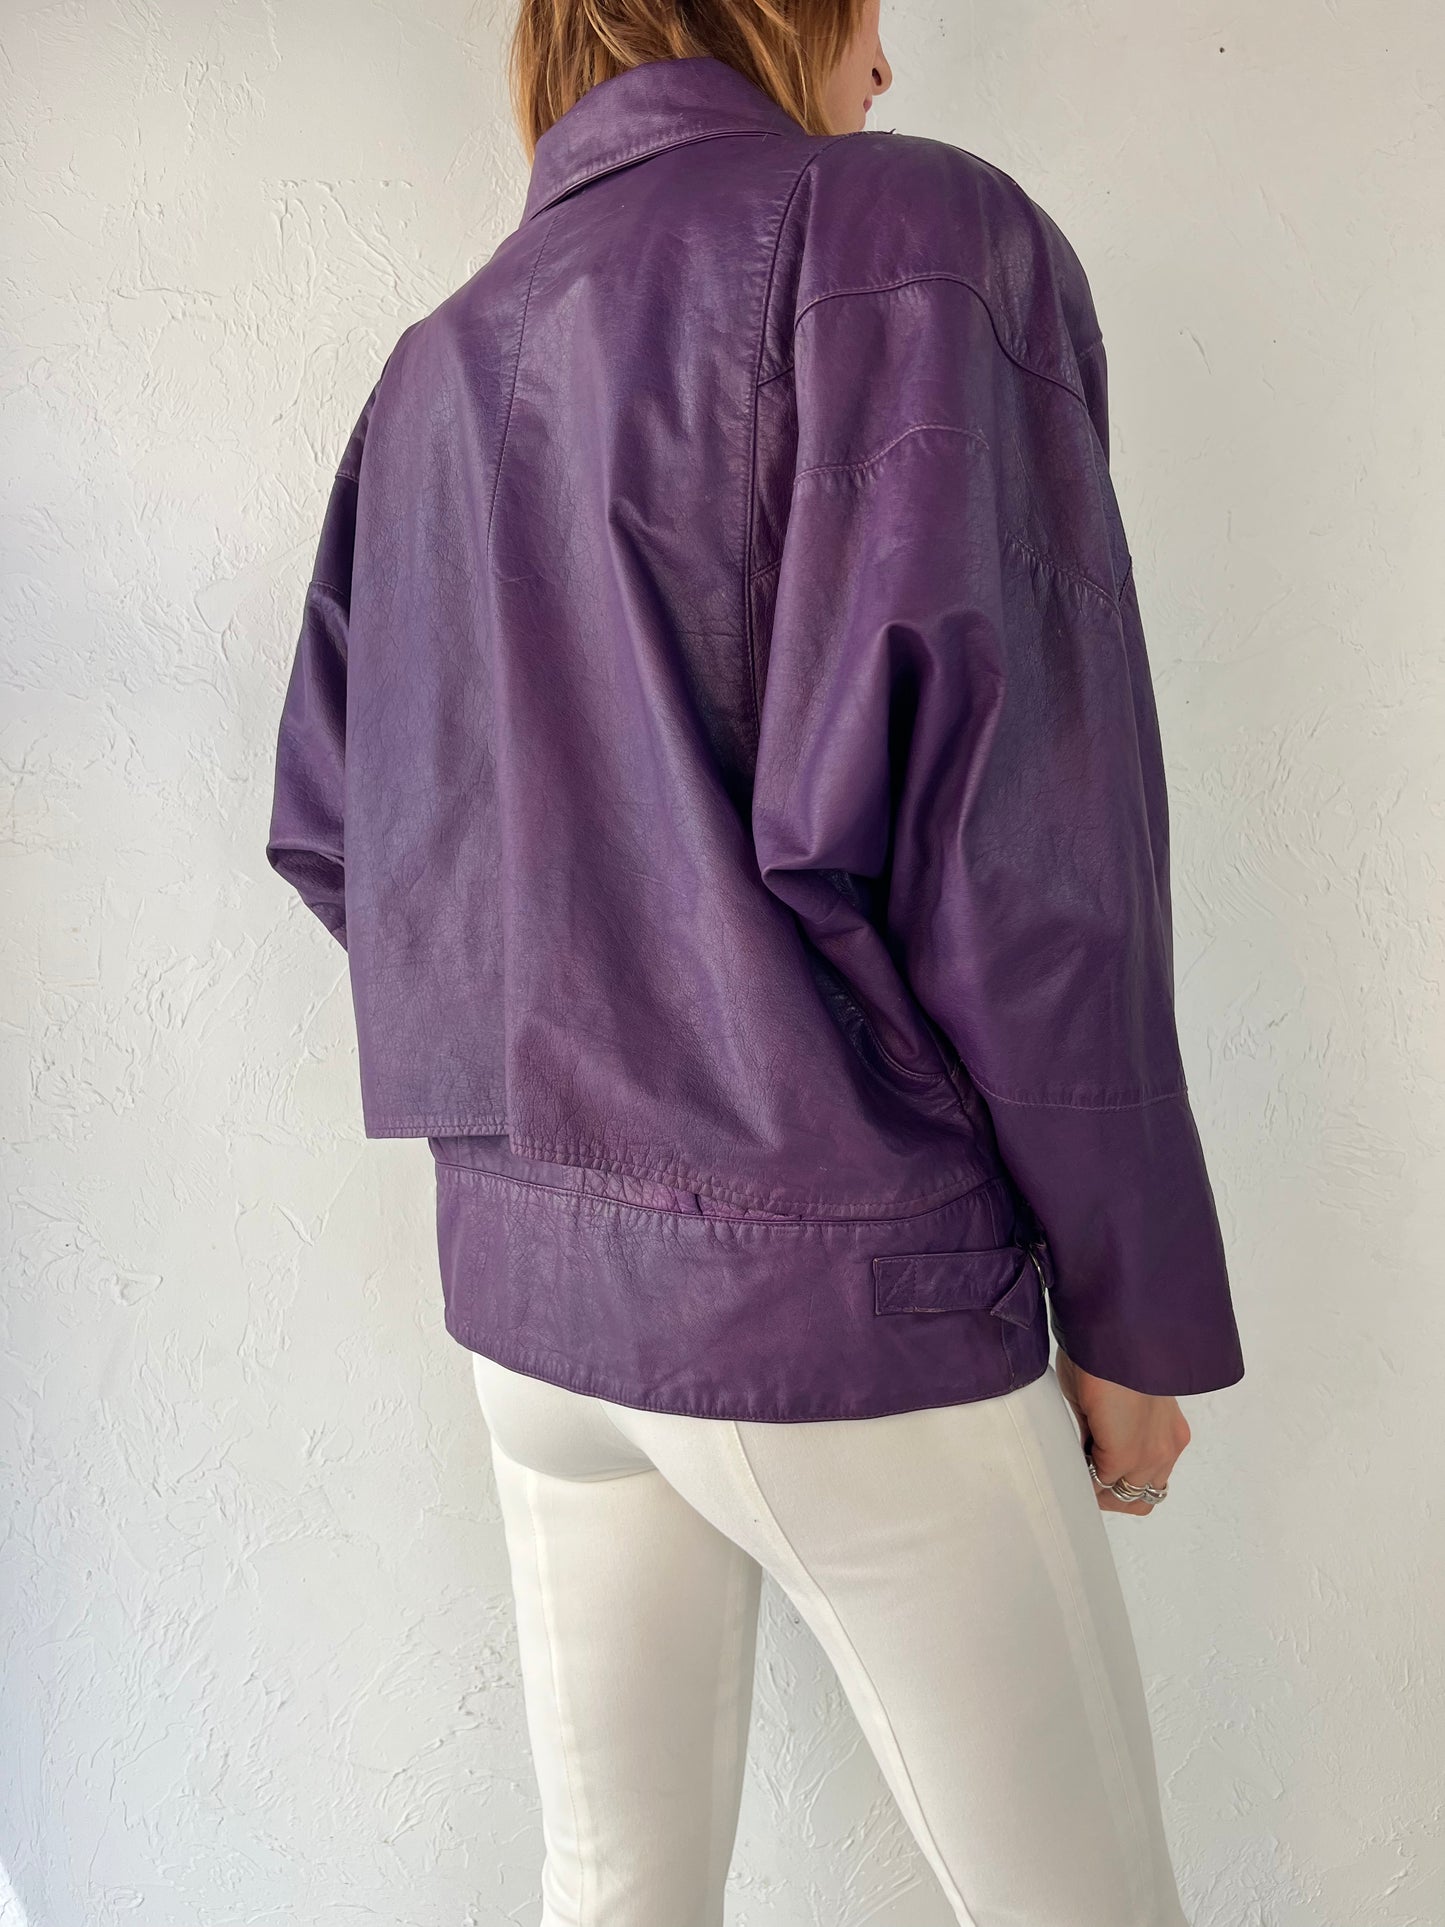 80s 90s 'Adam Douglas' Purple Leather Bomber Jacket / Small